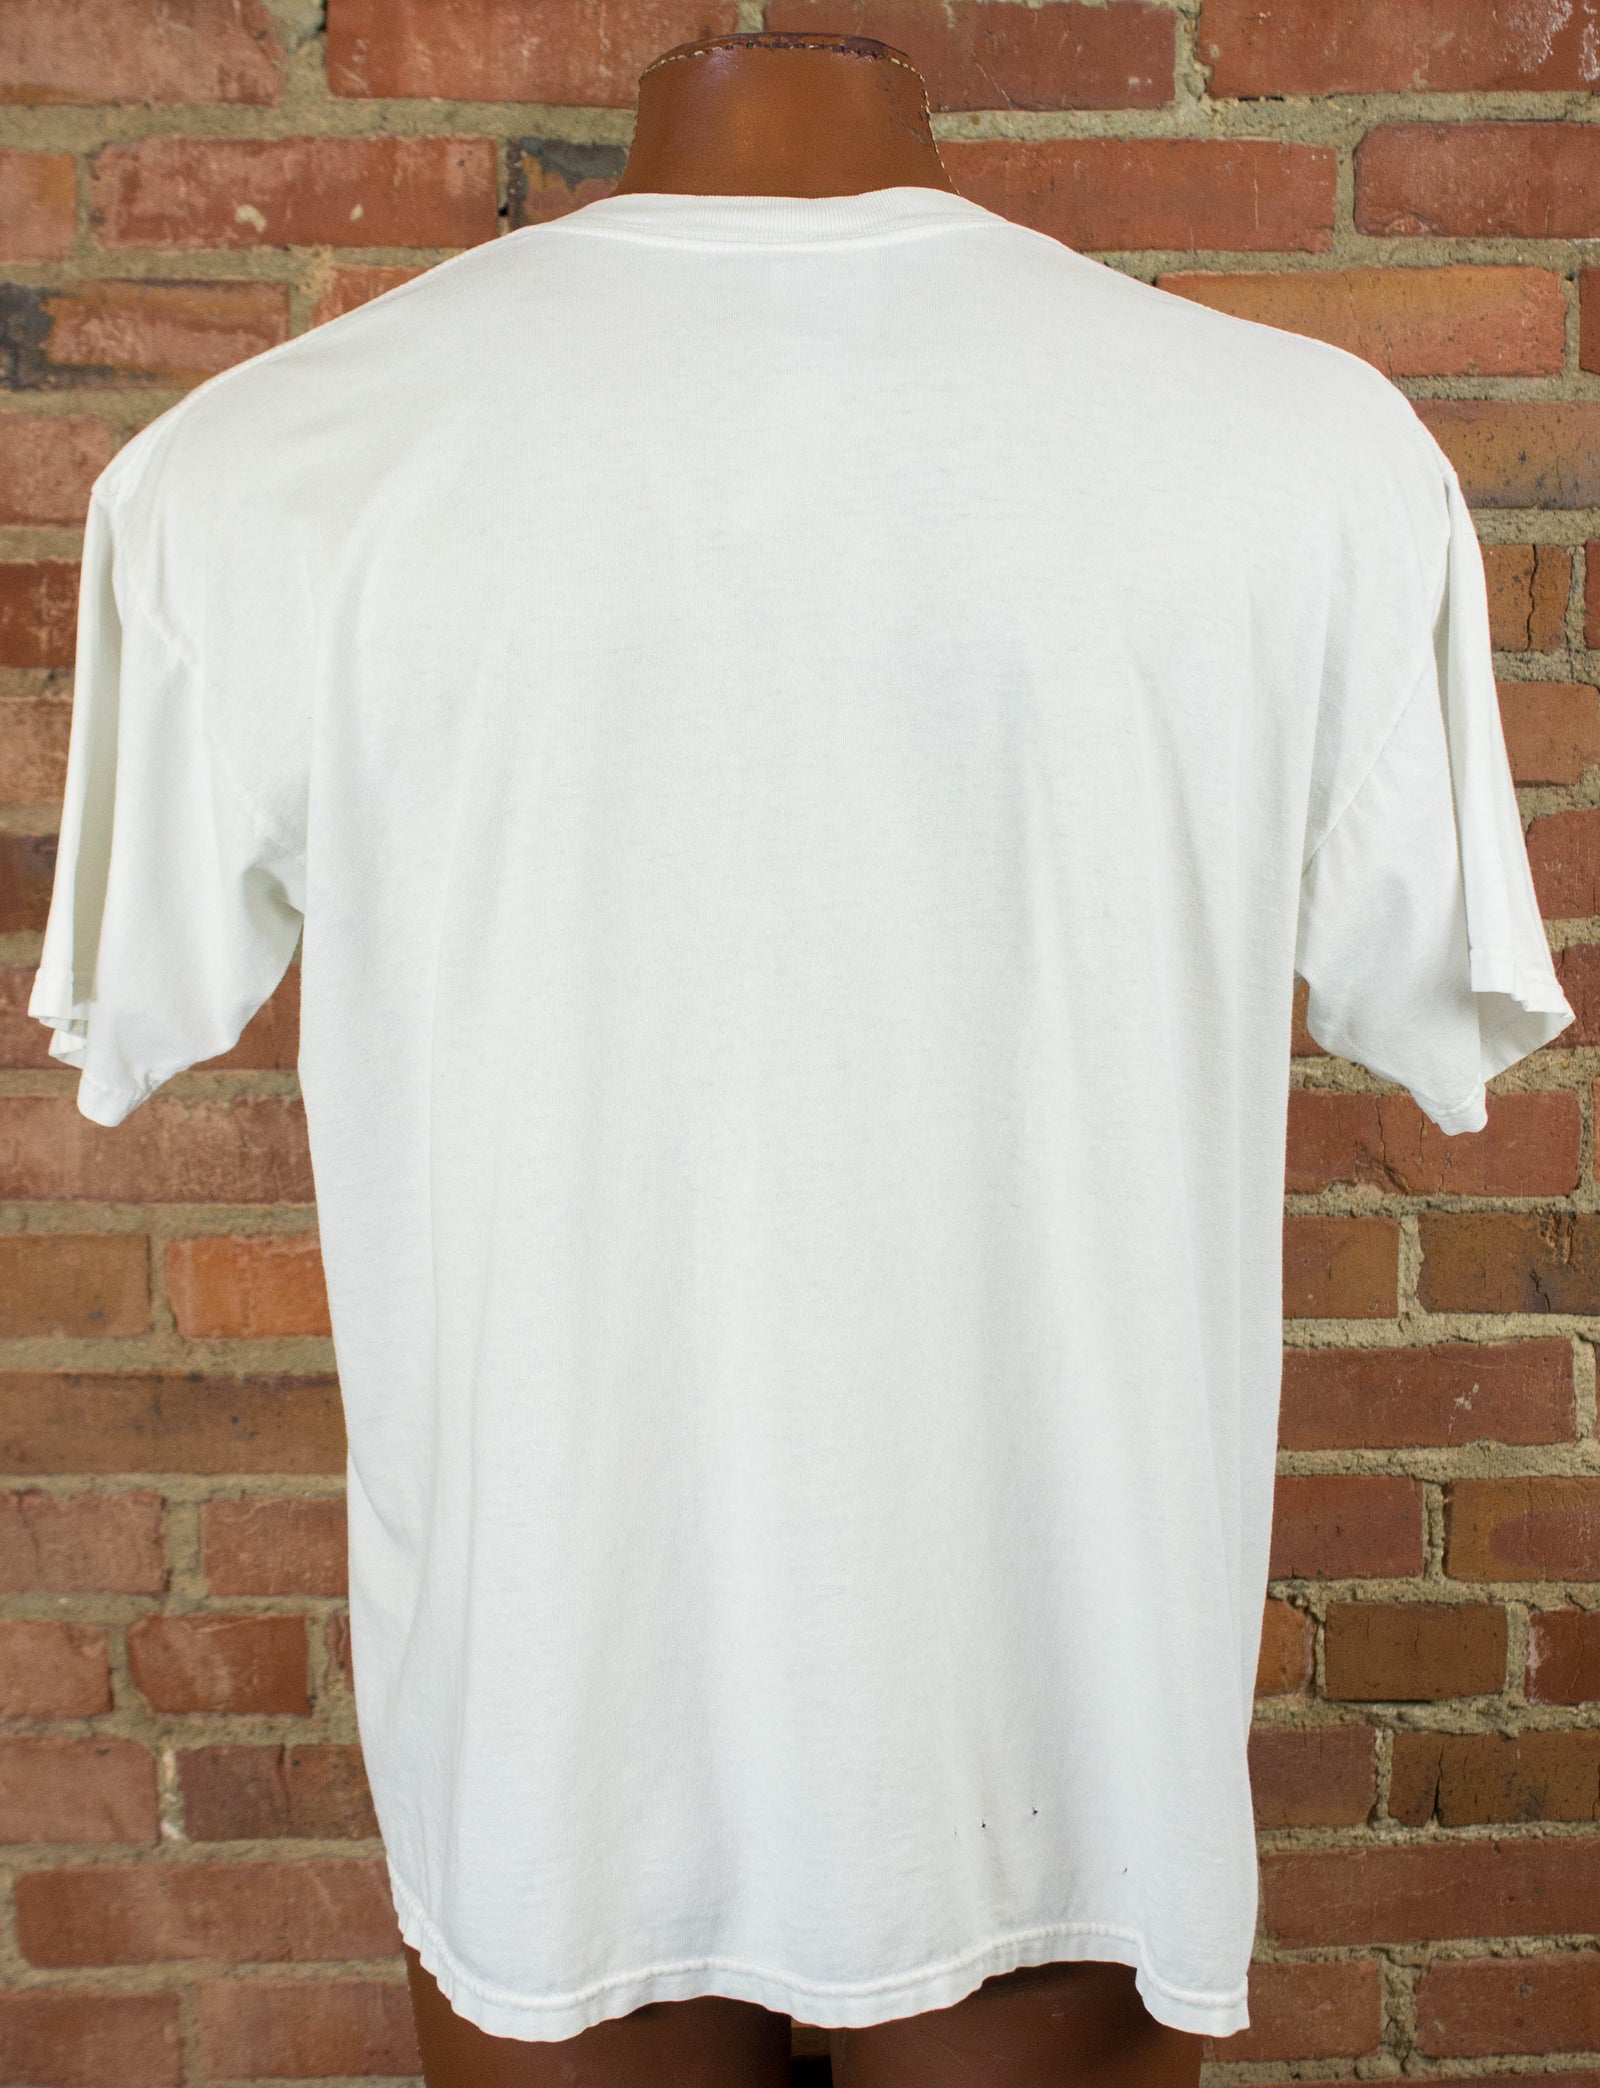 Vintage 1997 South Park Characters White Graphic T Shirt Unisex XL